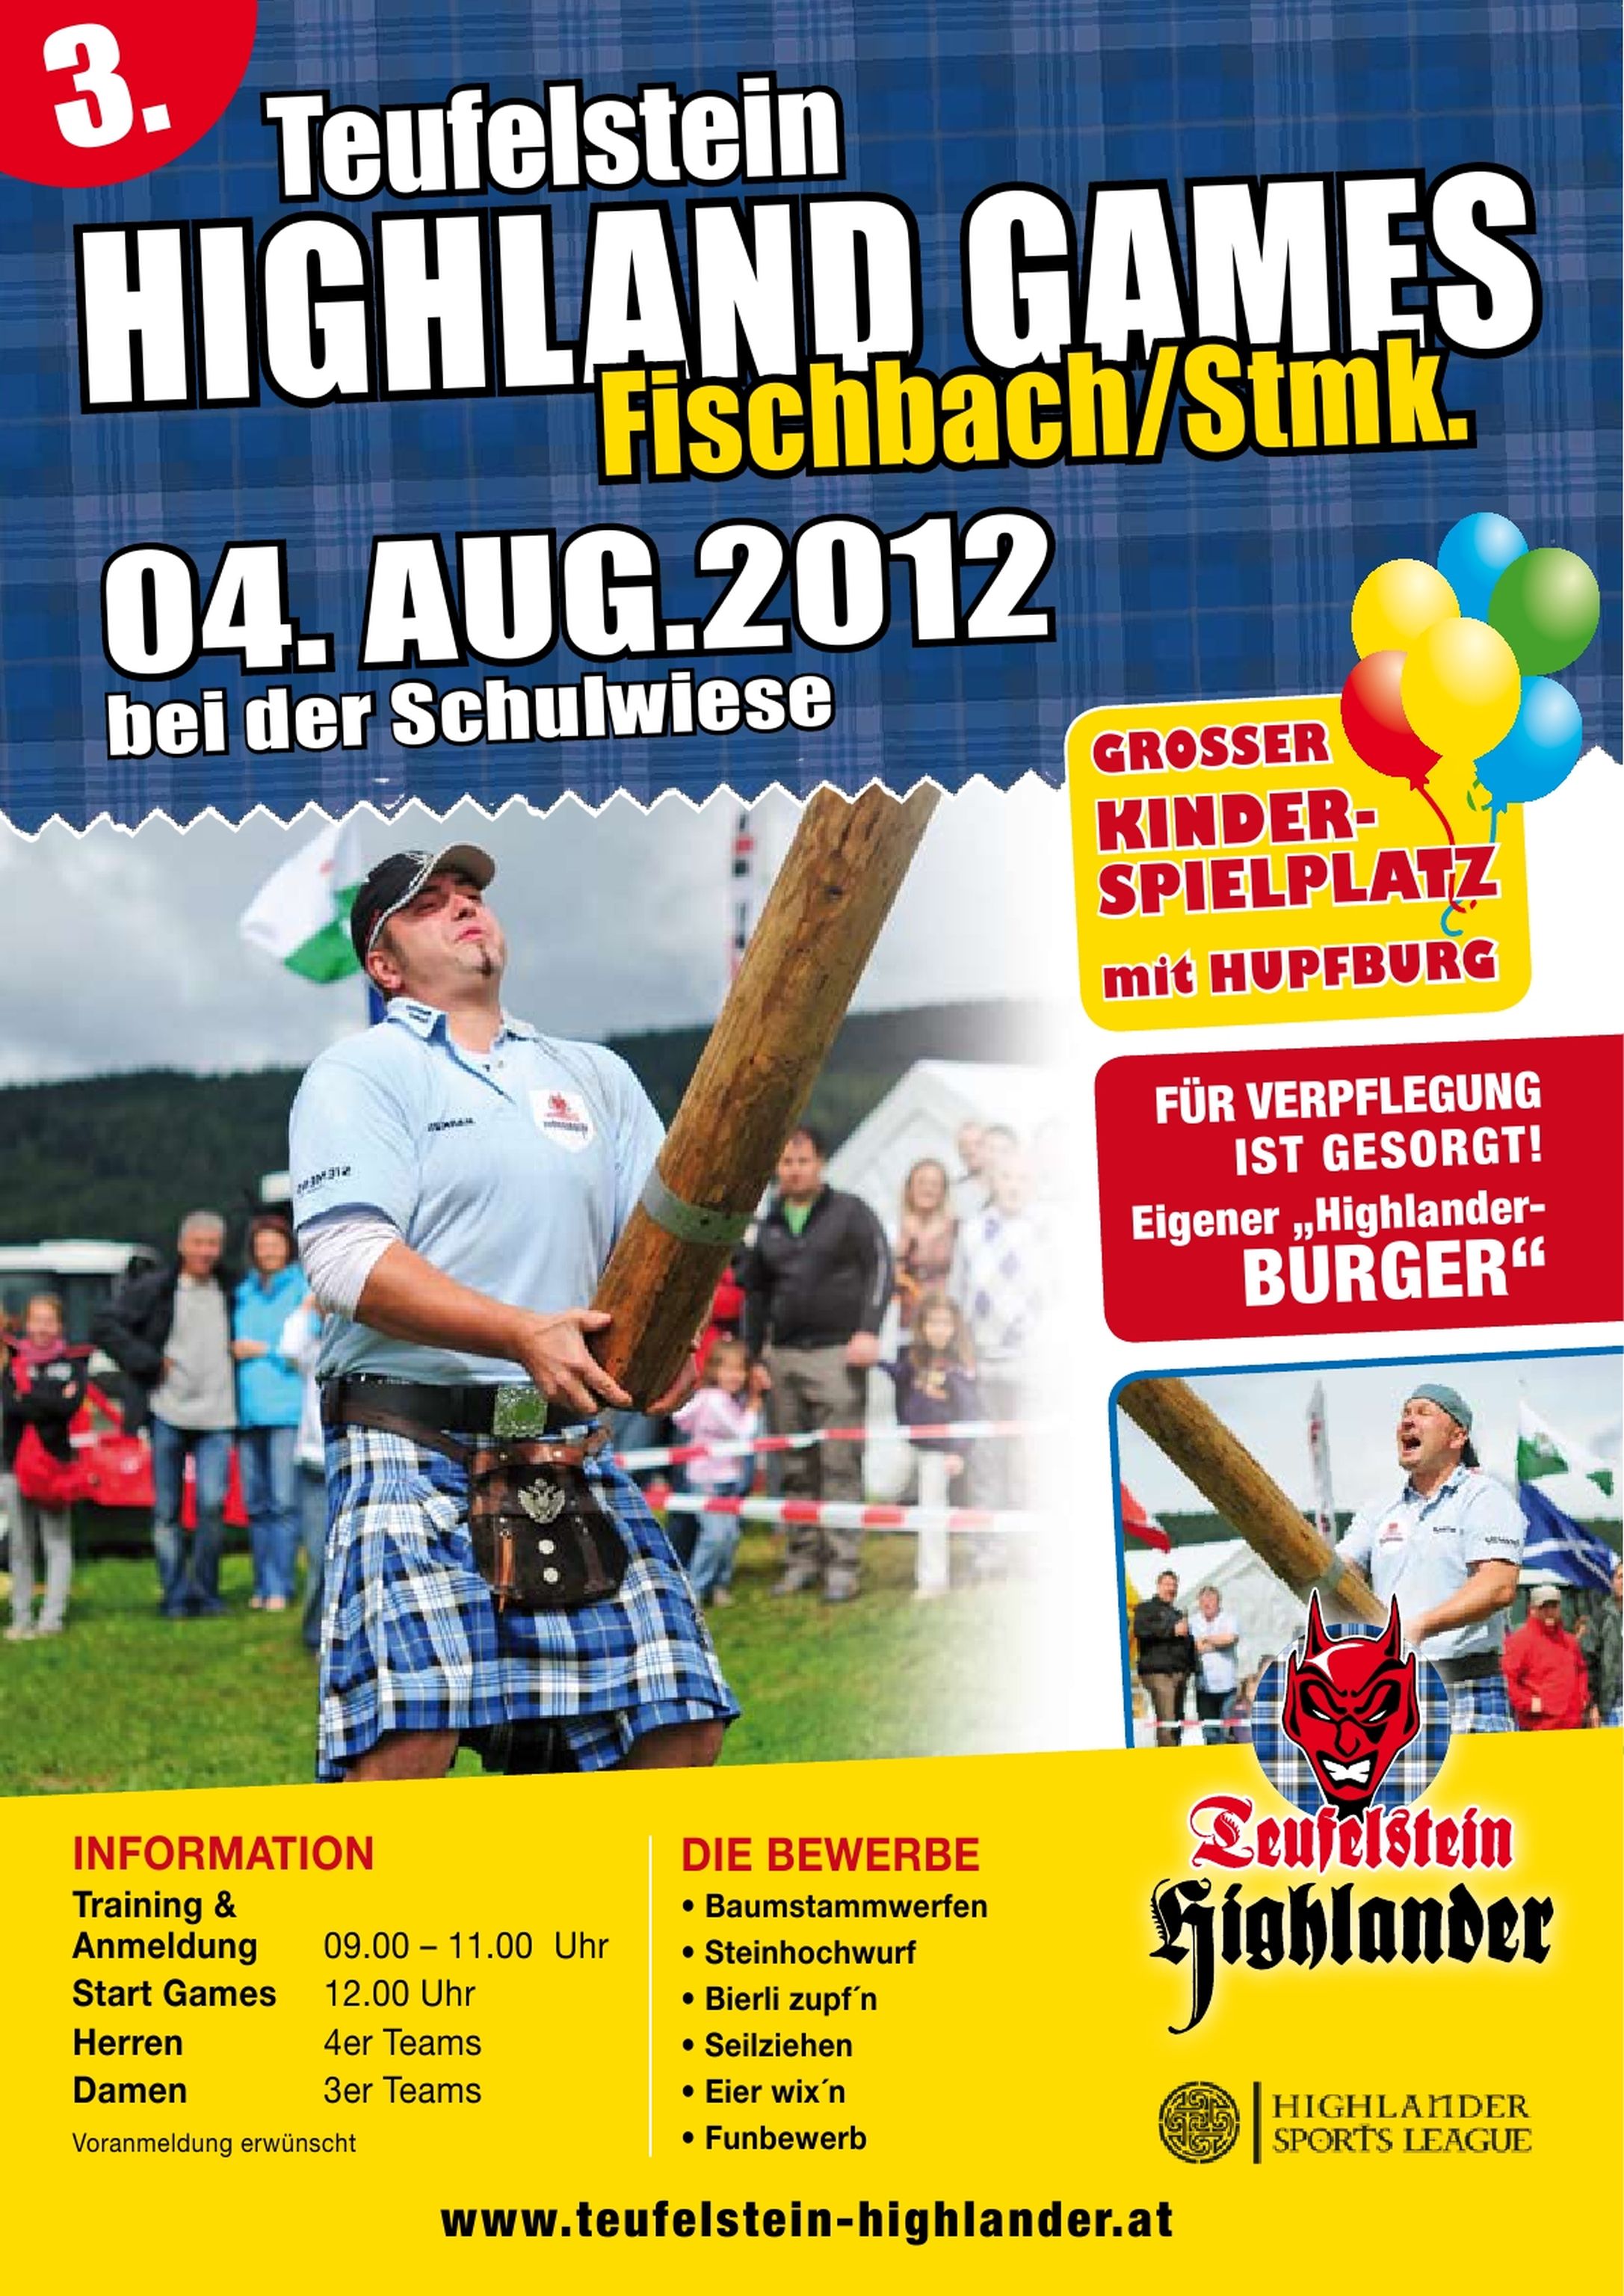 3. Highlandgames am 04.08.2012